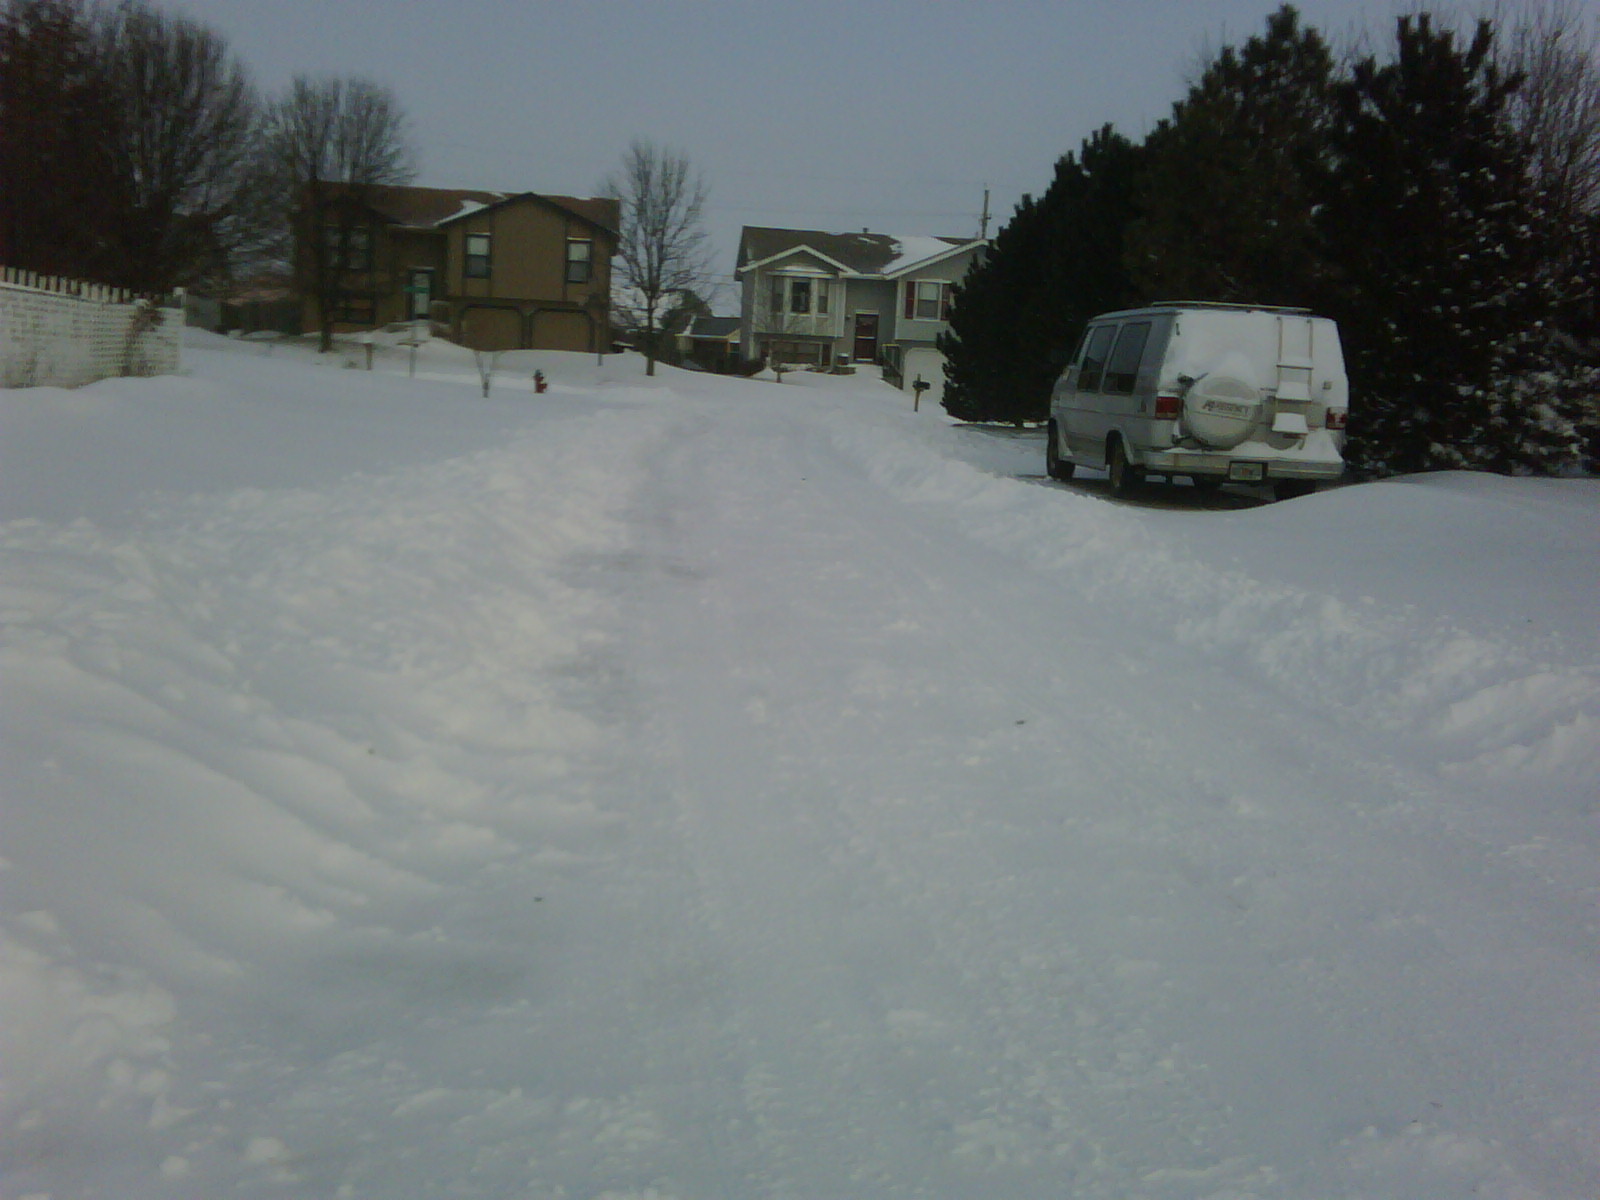 Topeka Roads snow covered